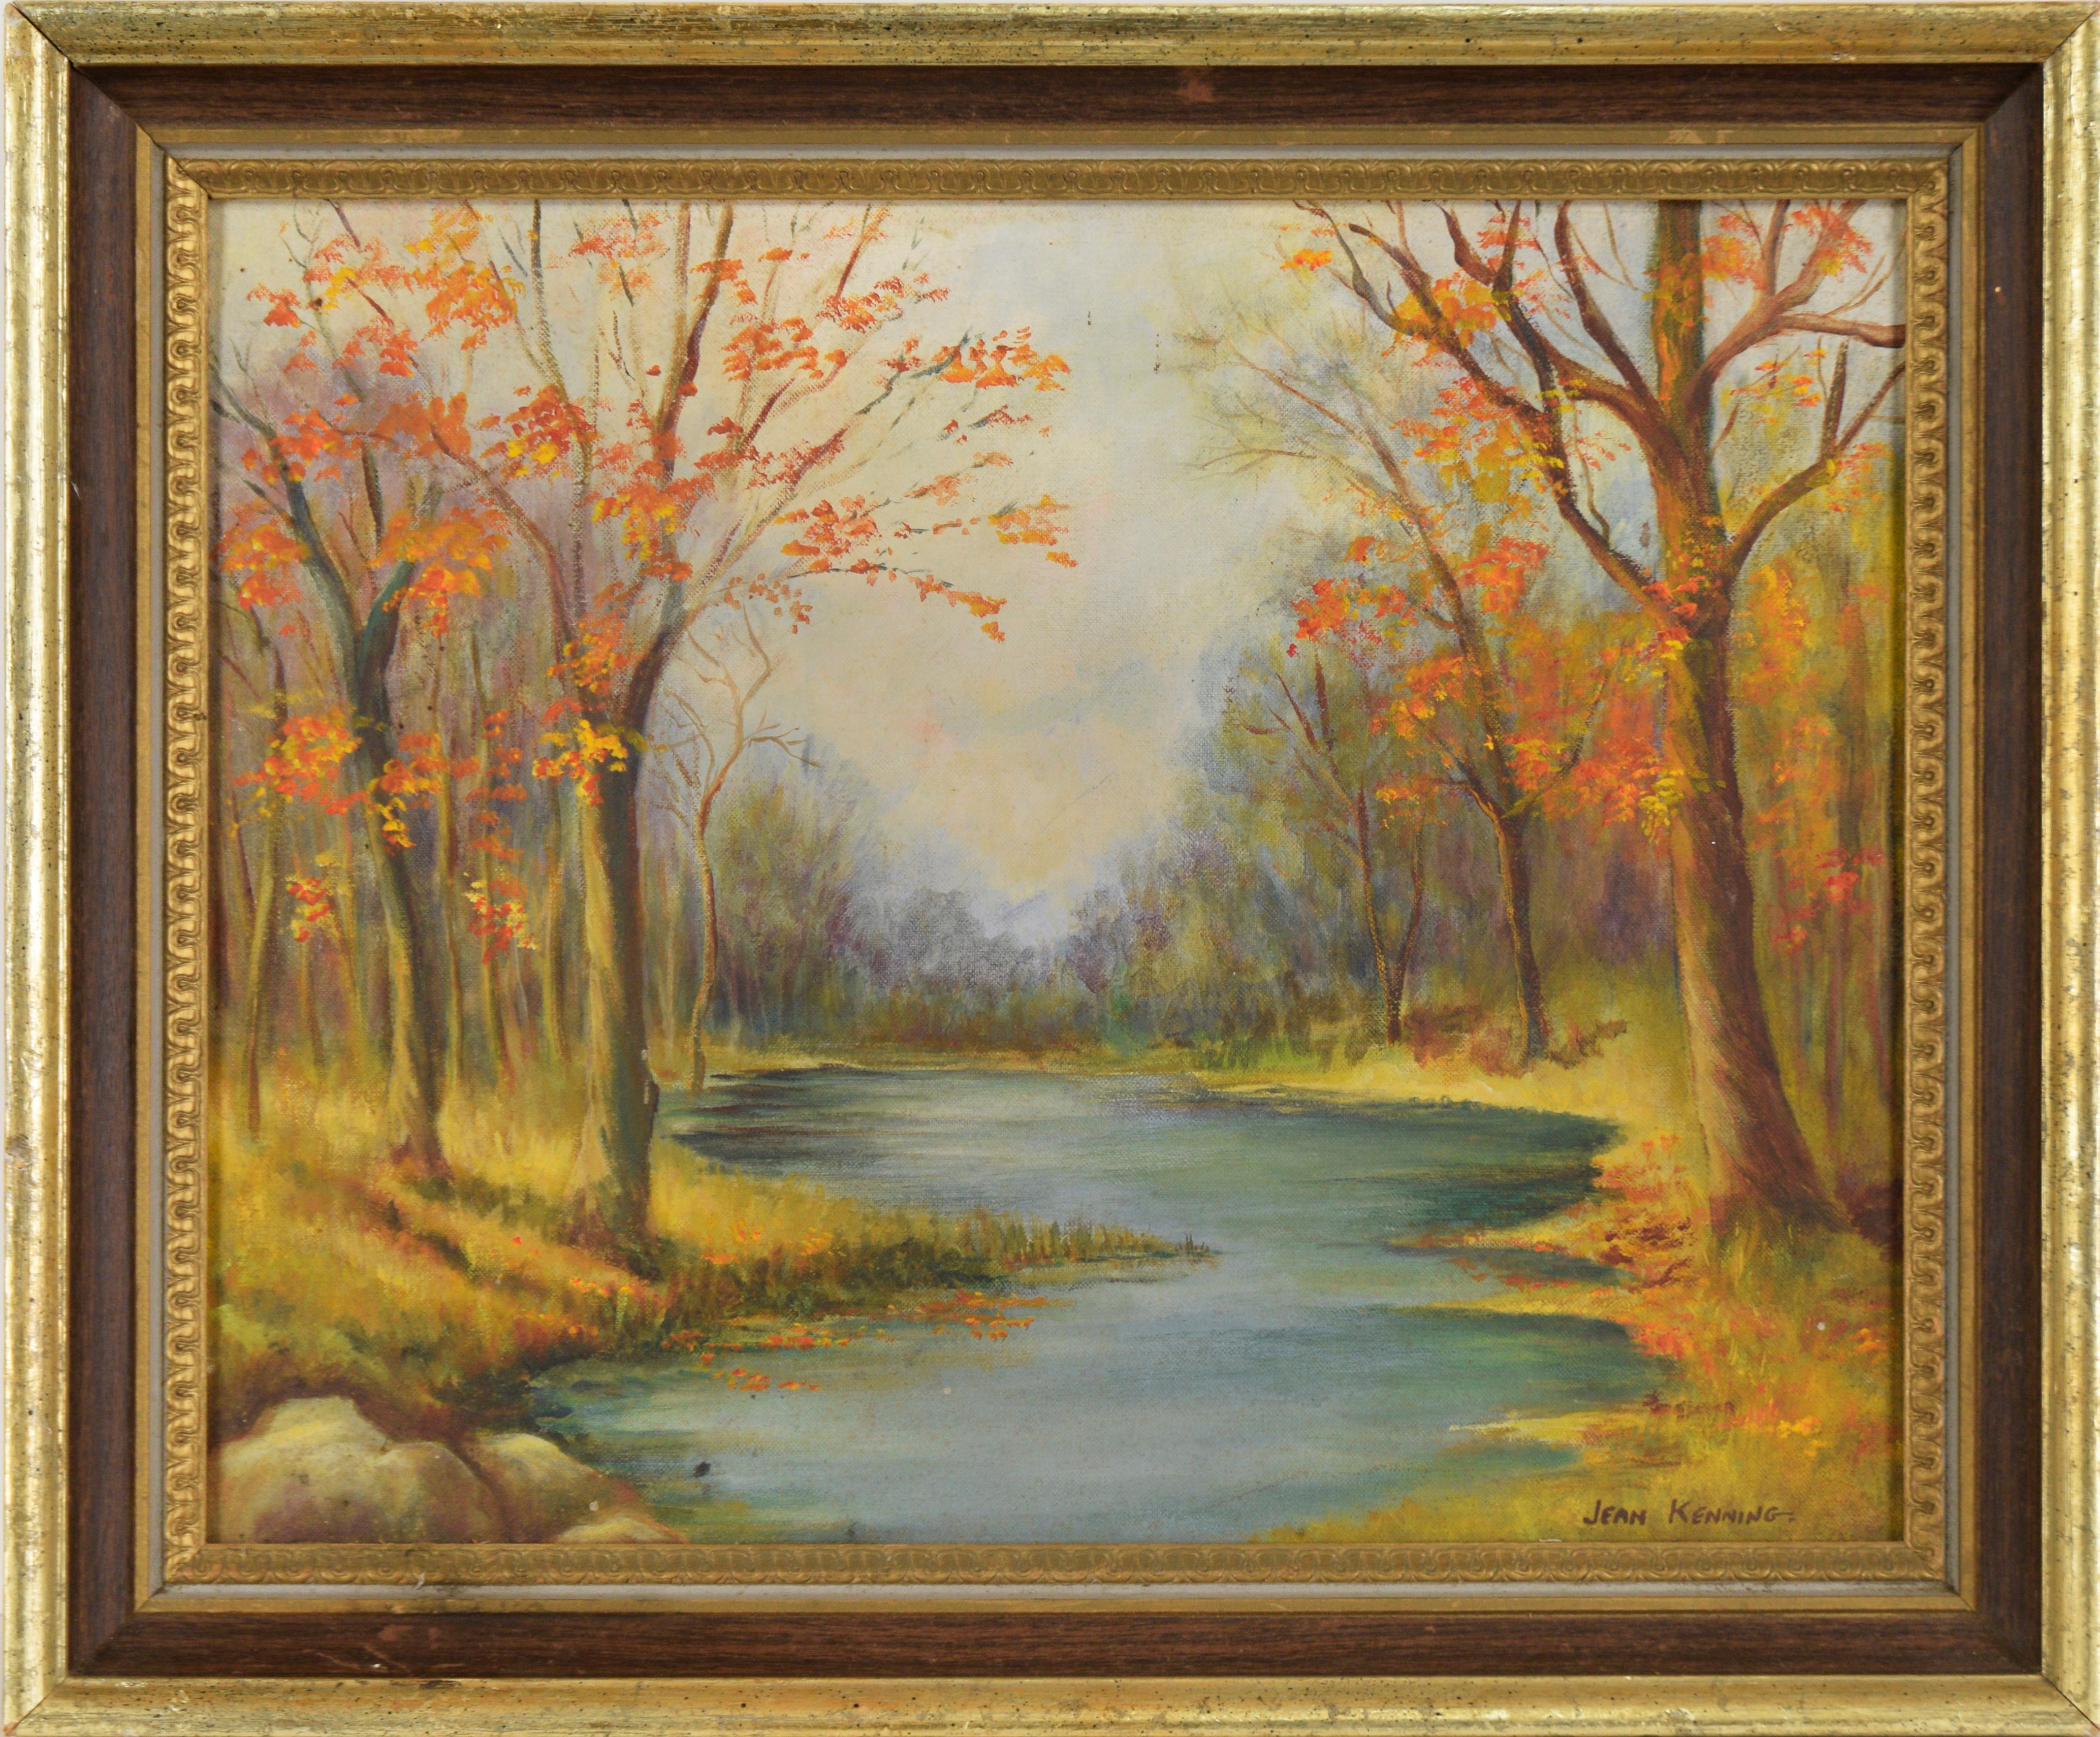 Jean Kenning Landscape Painting - Autumn Stream - Original 1973 Oil Landscape